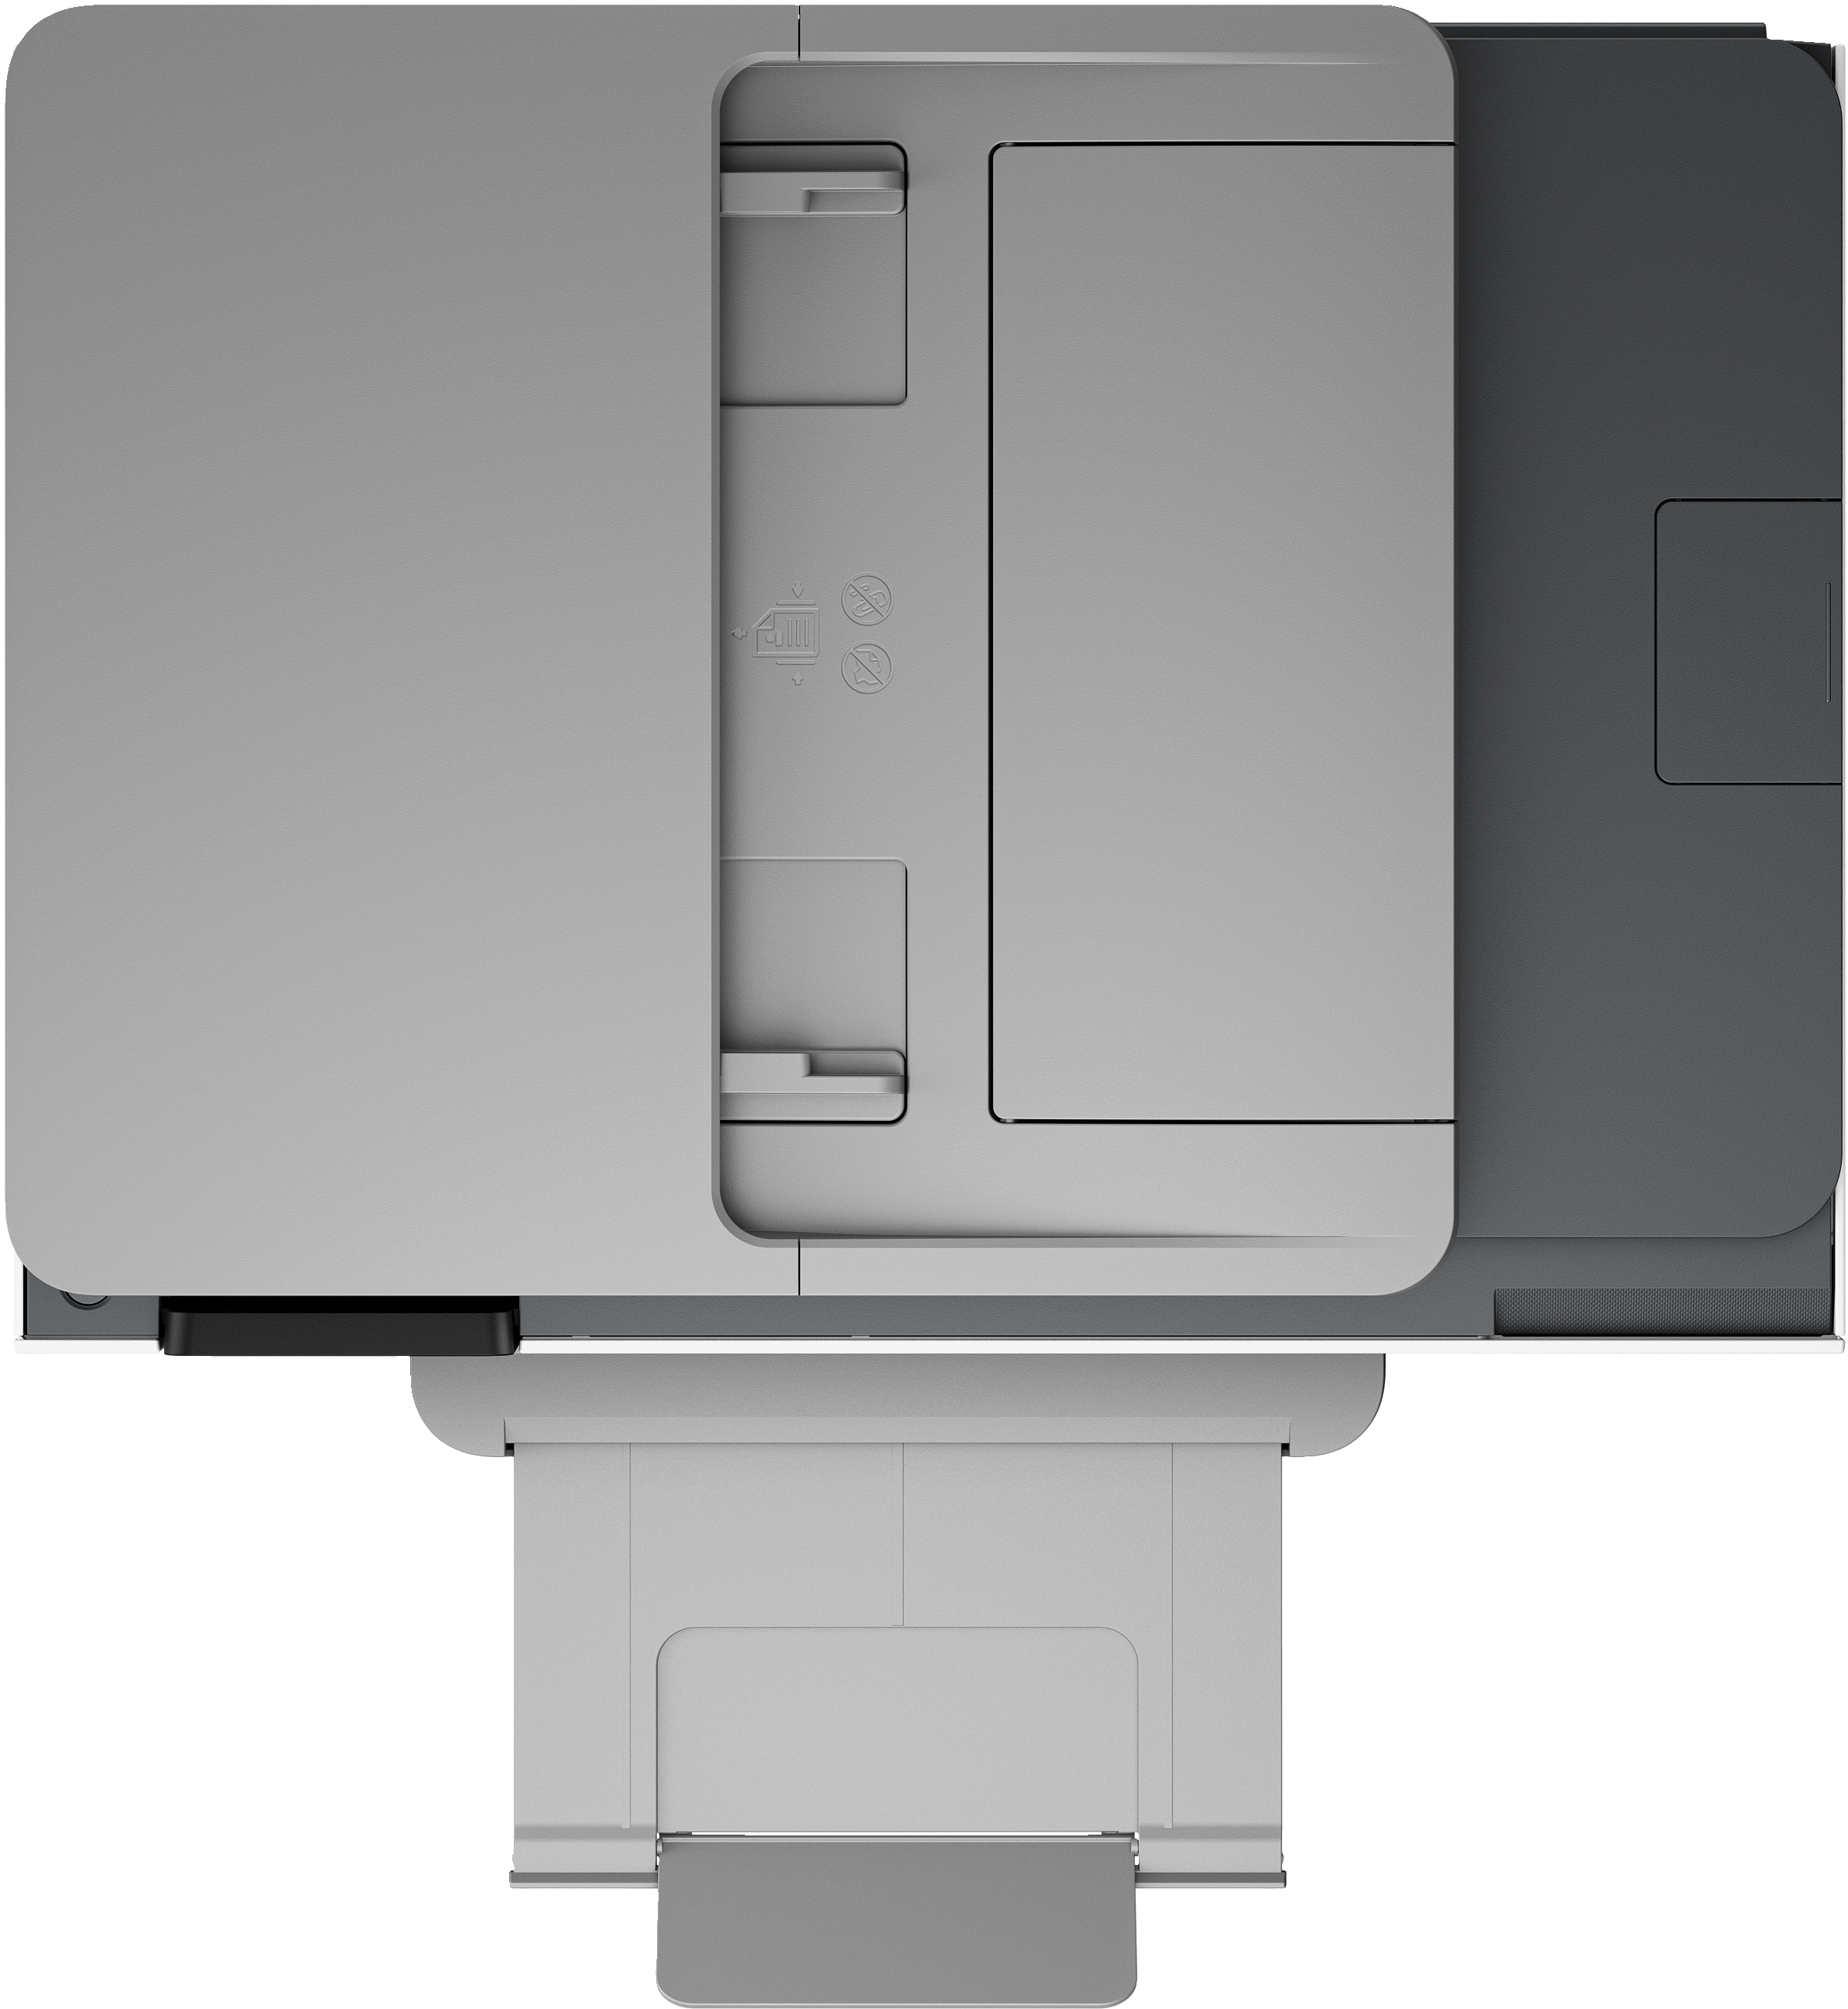 HP OfficeJet Pro 8022 - Impresora Multifunción de Tinta (20 ppm, 4800 x  1200 dpi, A4, WiFi) Color Gris